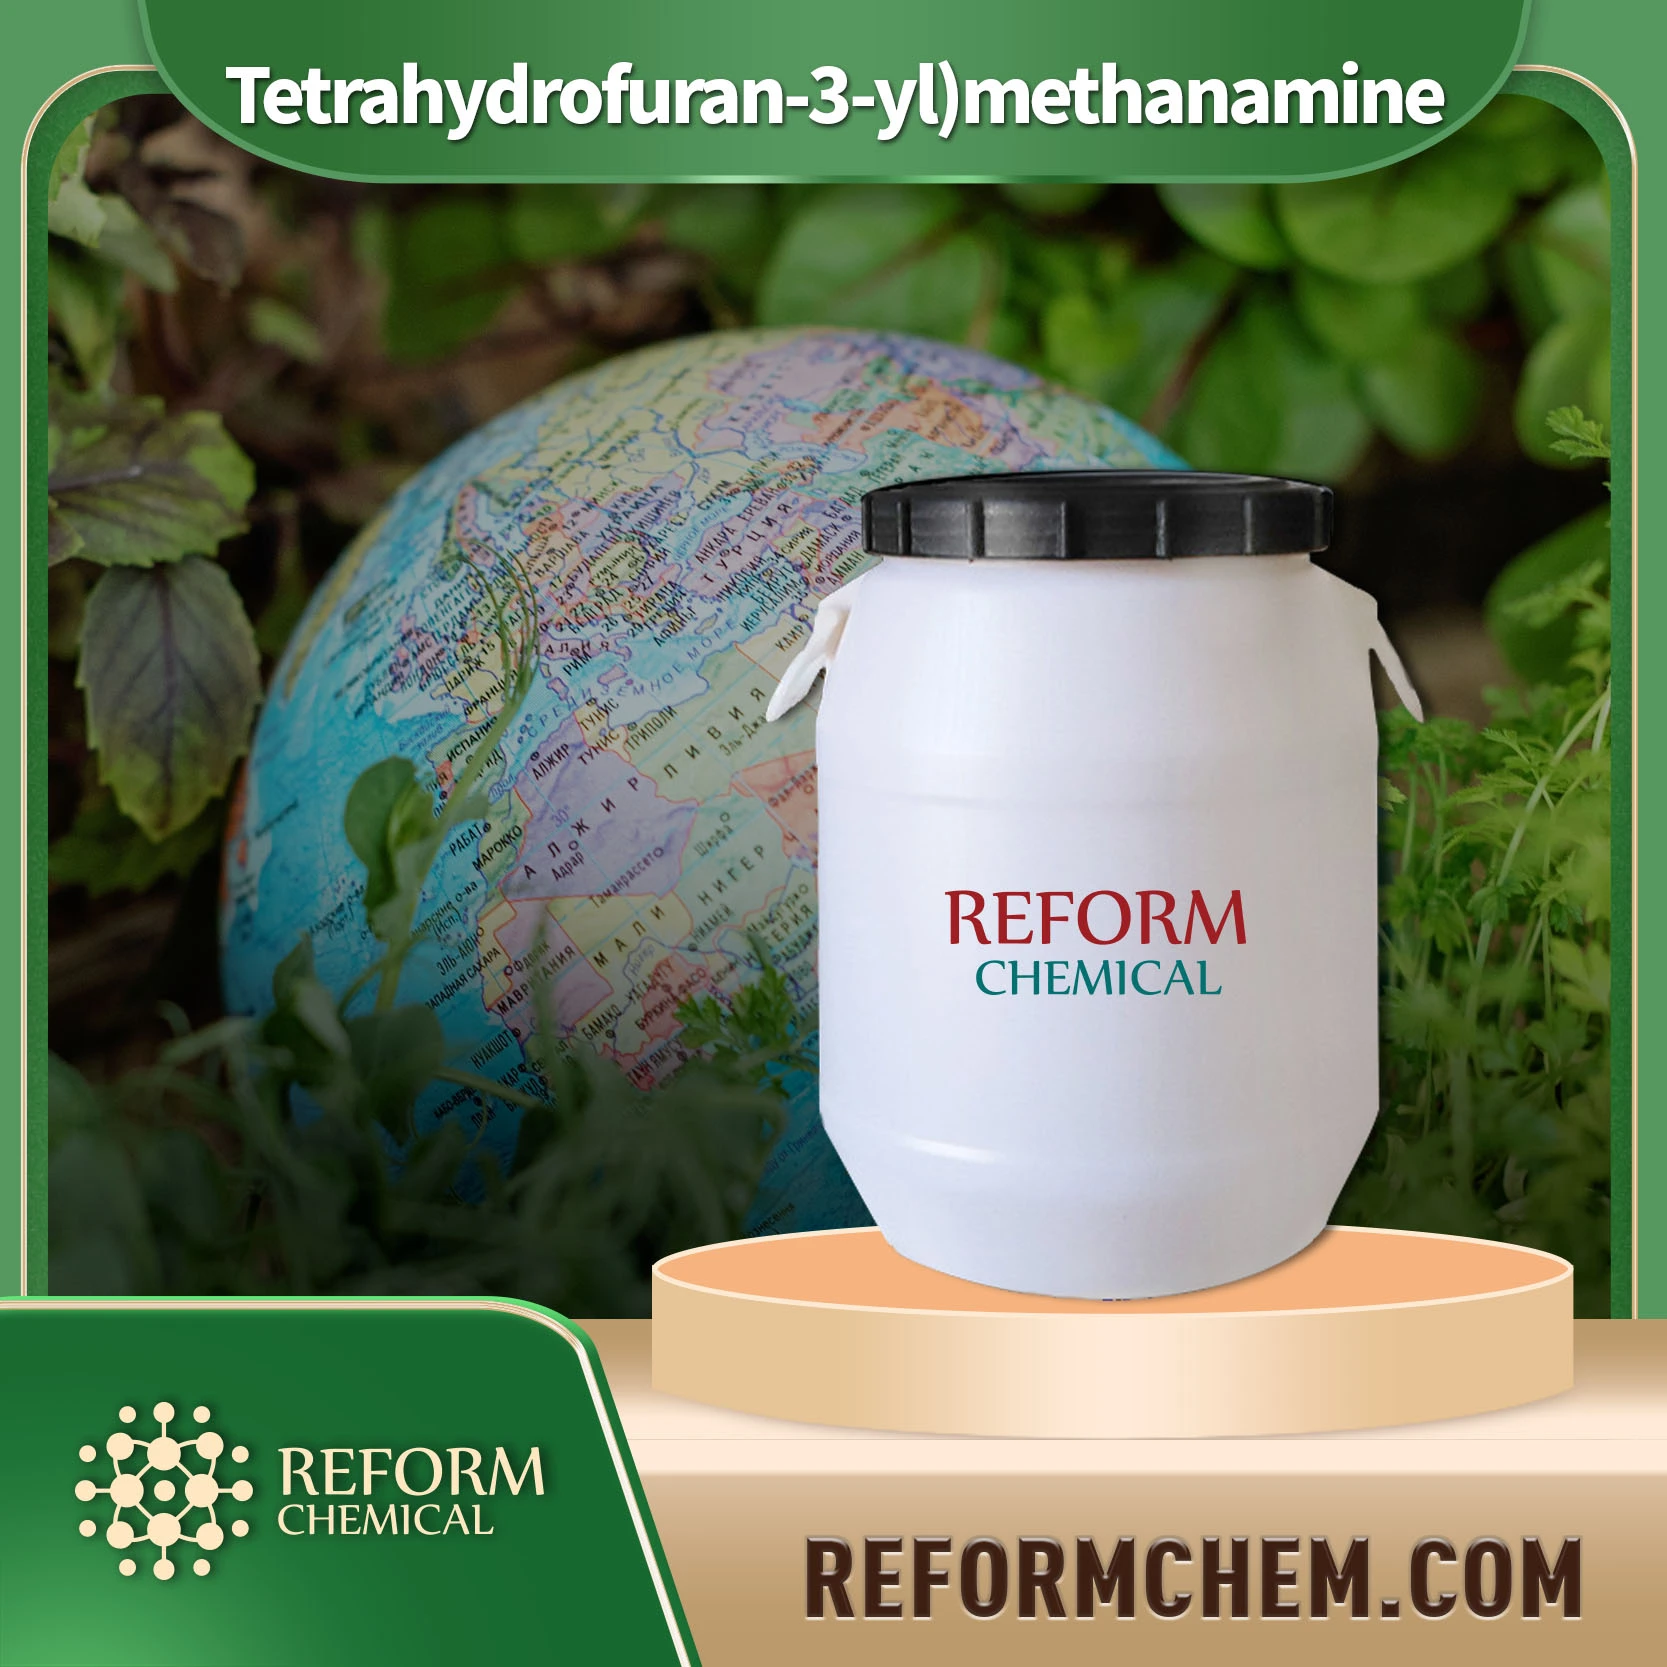 Tetrahydrofuran-3-yl)methanamine